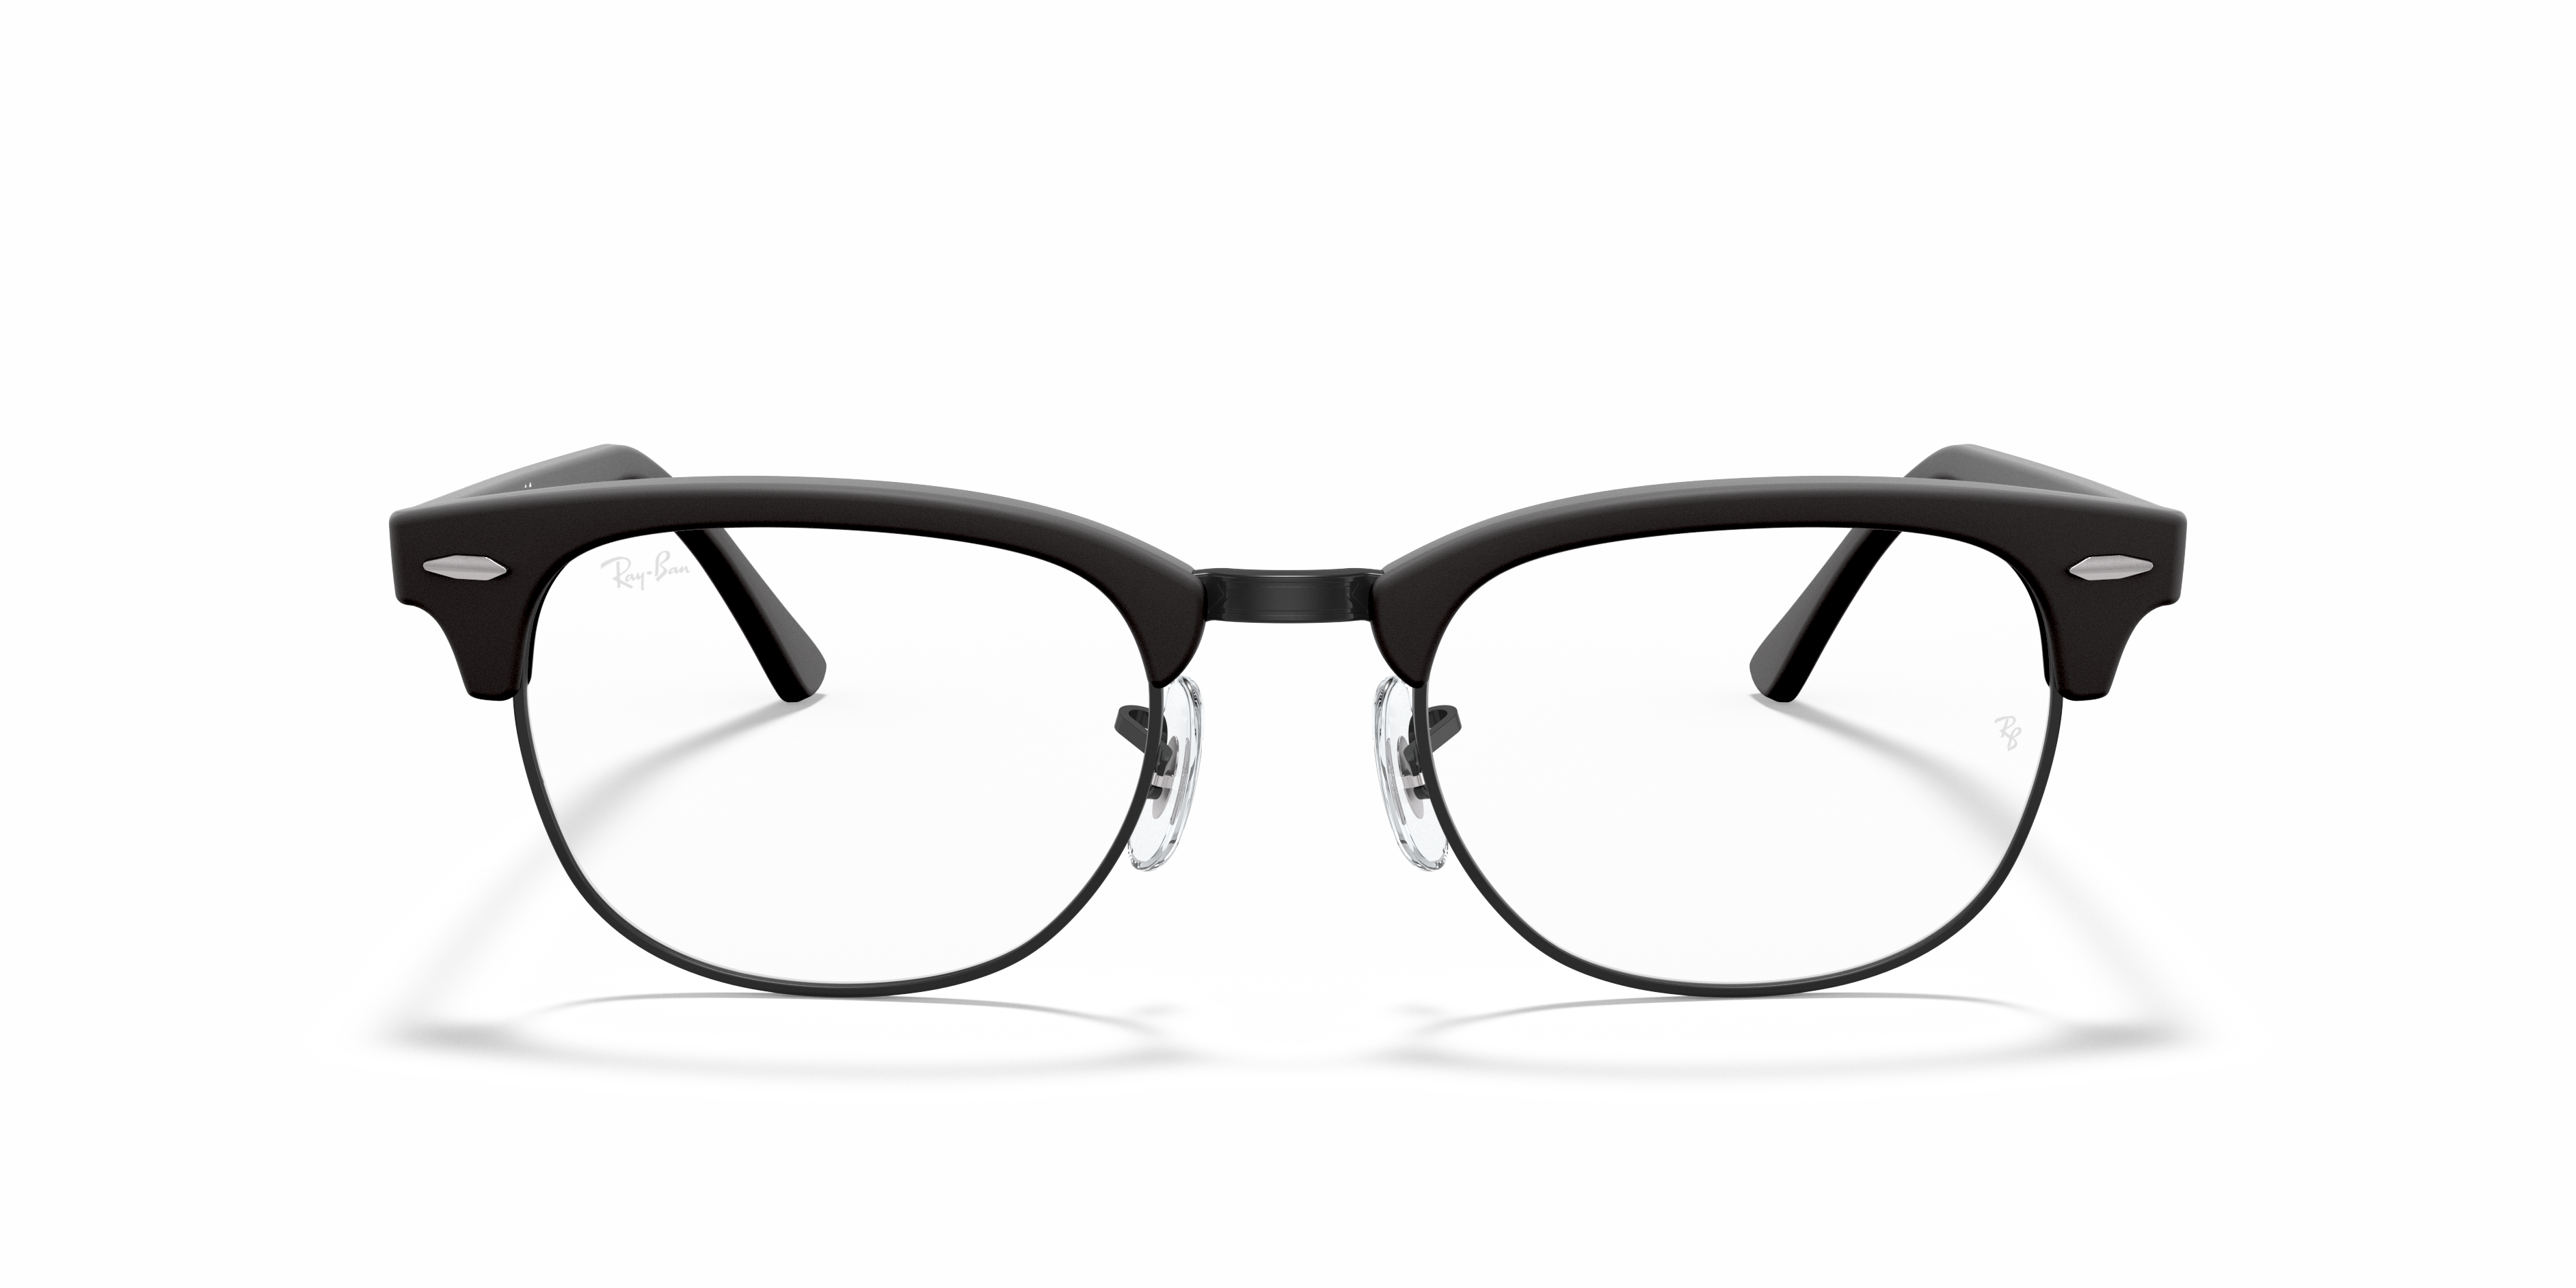 Clubmaster Optics Eyeglasses with Black Frame | Ray-Ban®